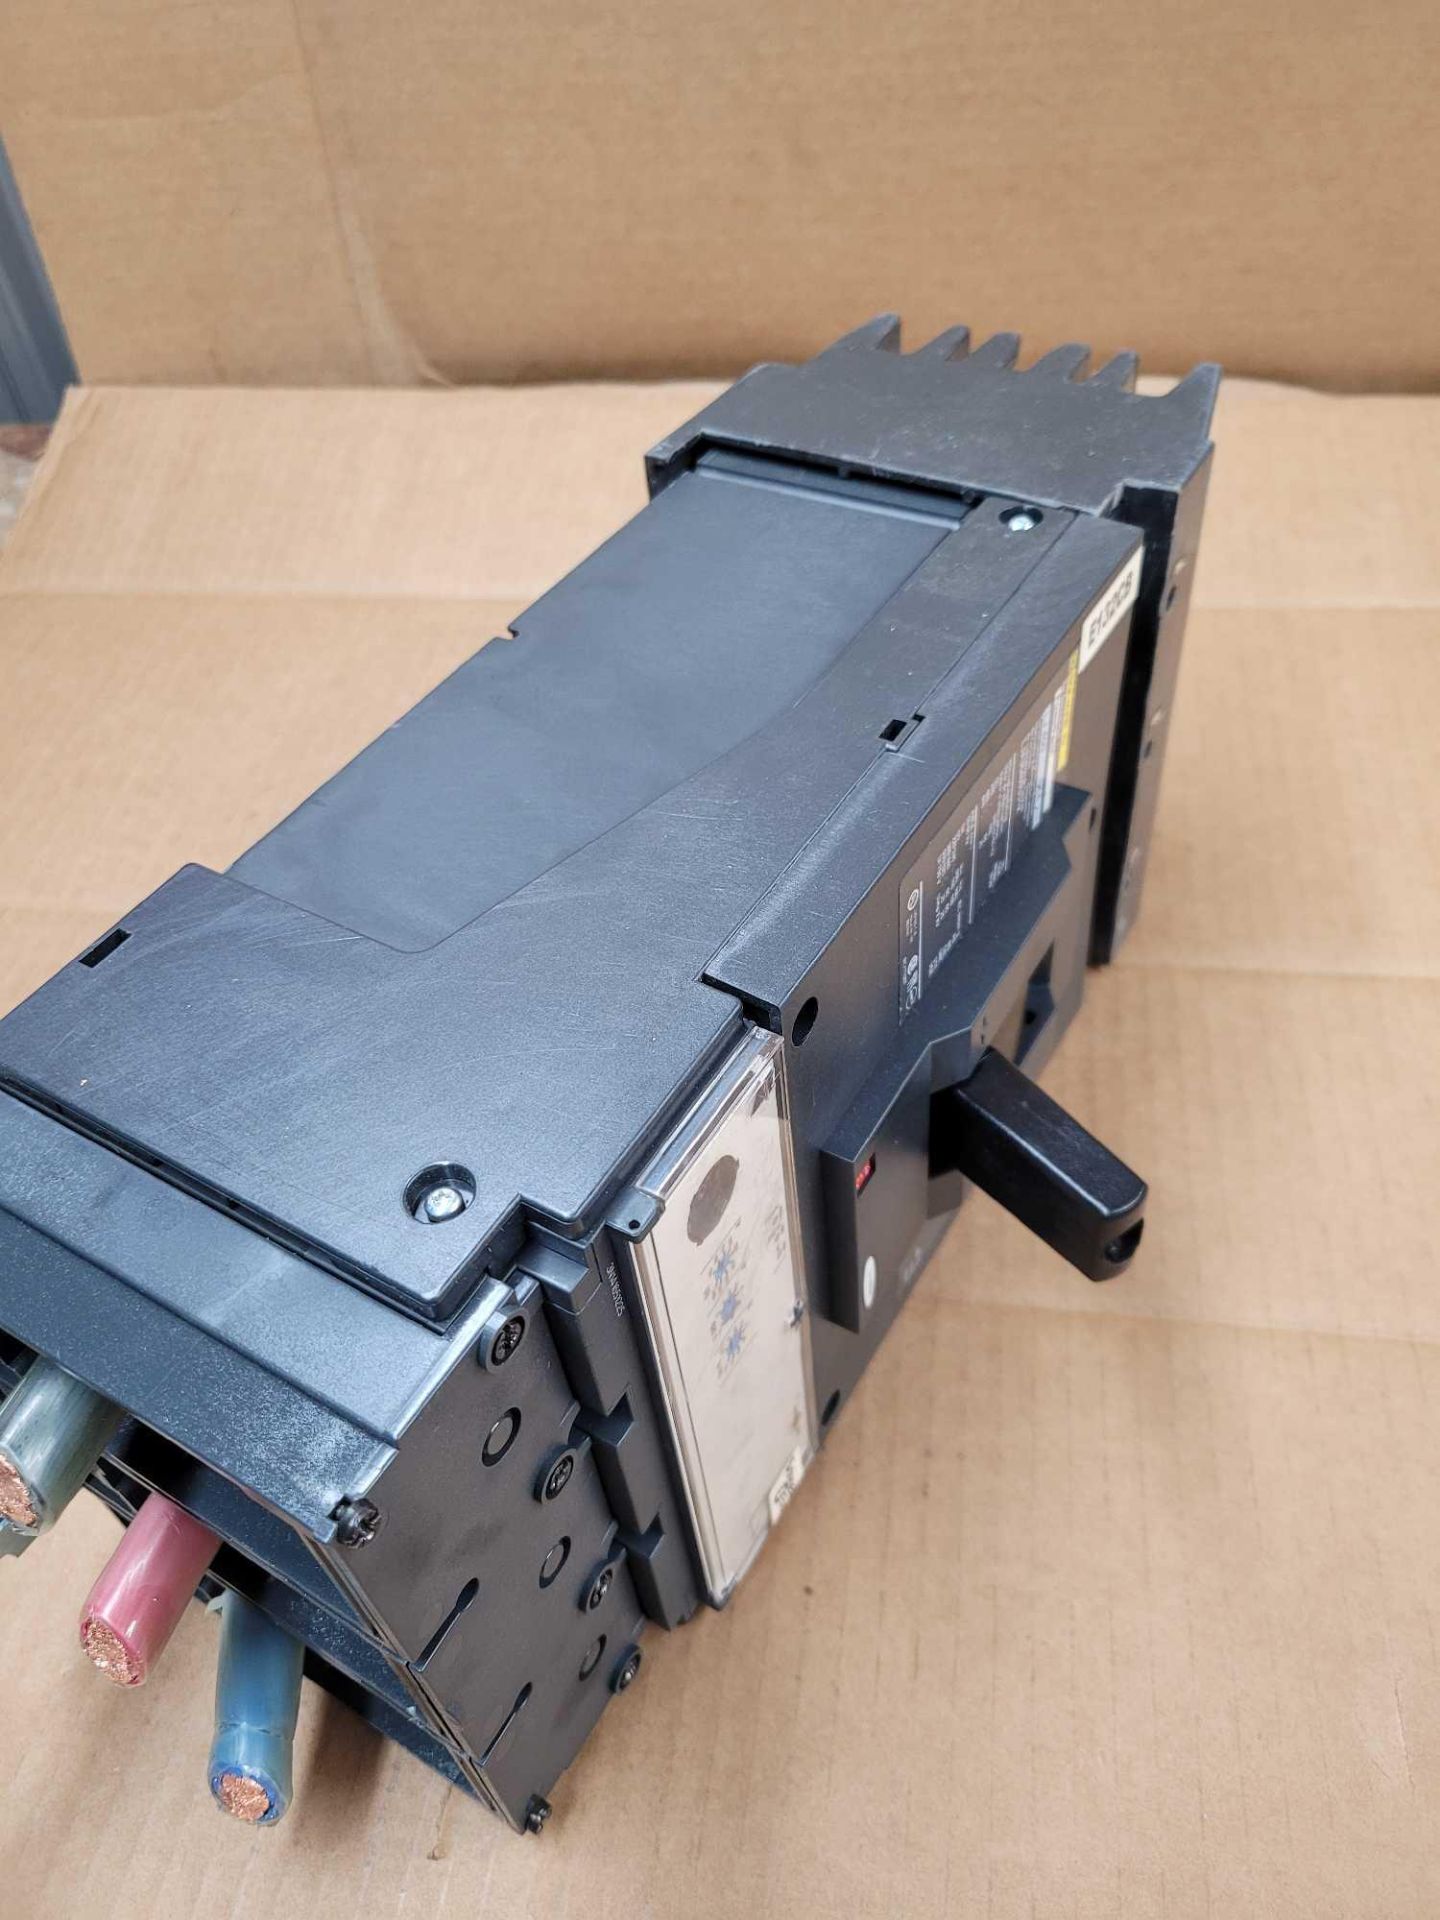 SQUARE D LJA36400U31X / 400 Amp Molded Case Circuit Breaker  /  Lot Weight: 16.2 lbs - Image 4 of 6